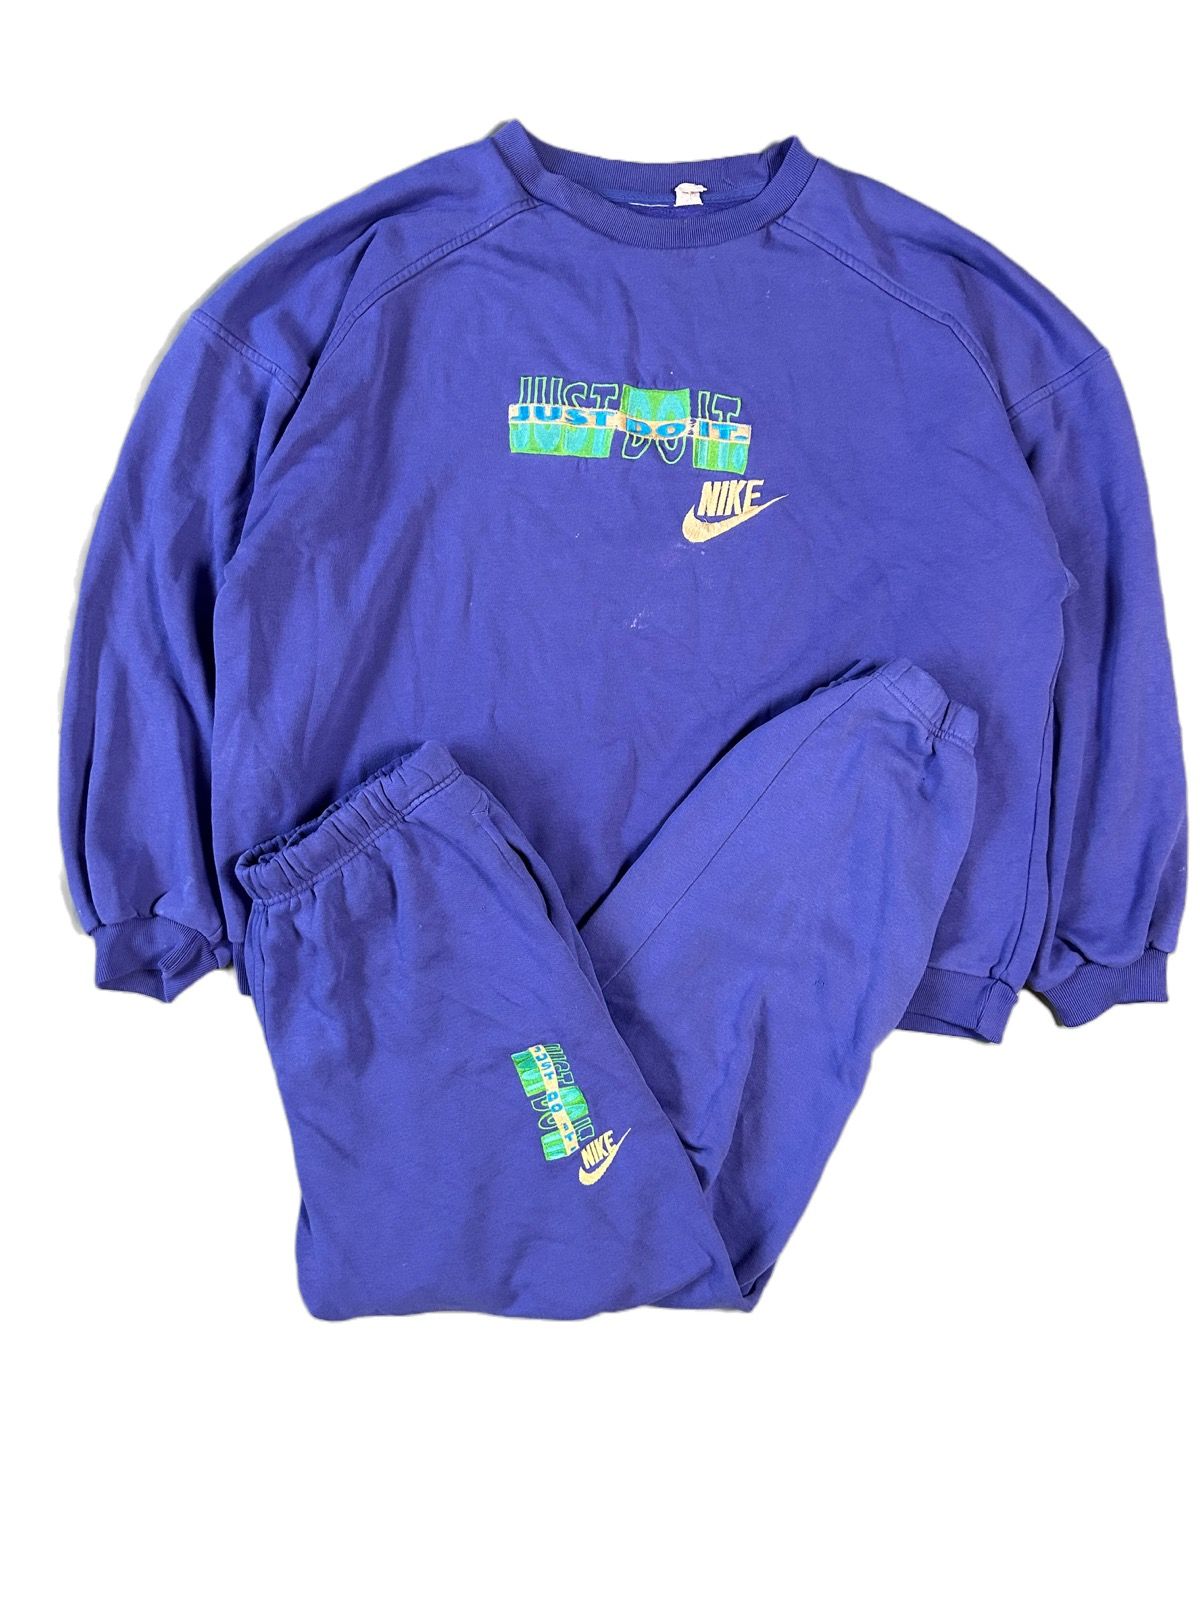 Nike Nike Purple track suit sweatshirt sweatpants 90s | Grailed